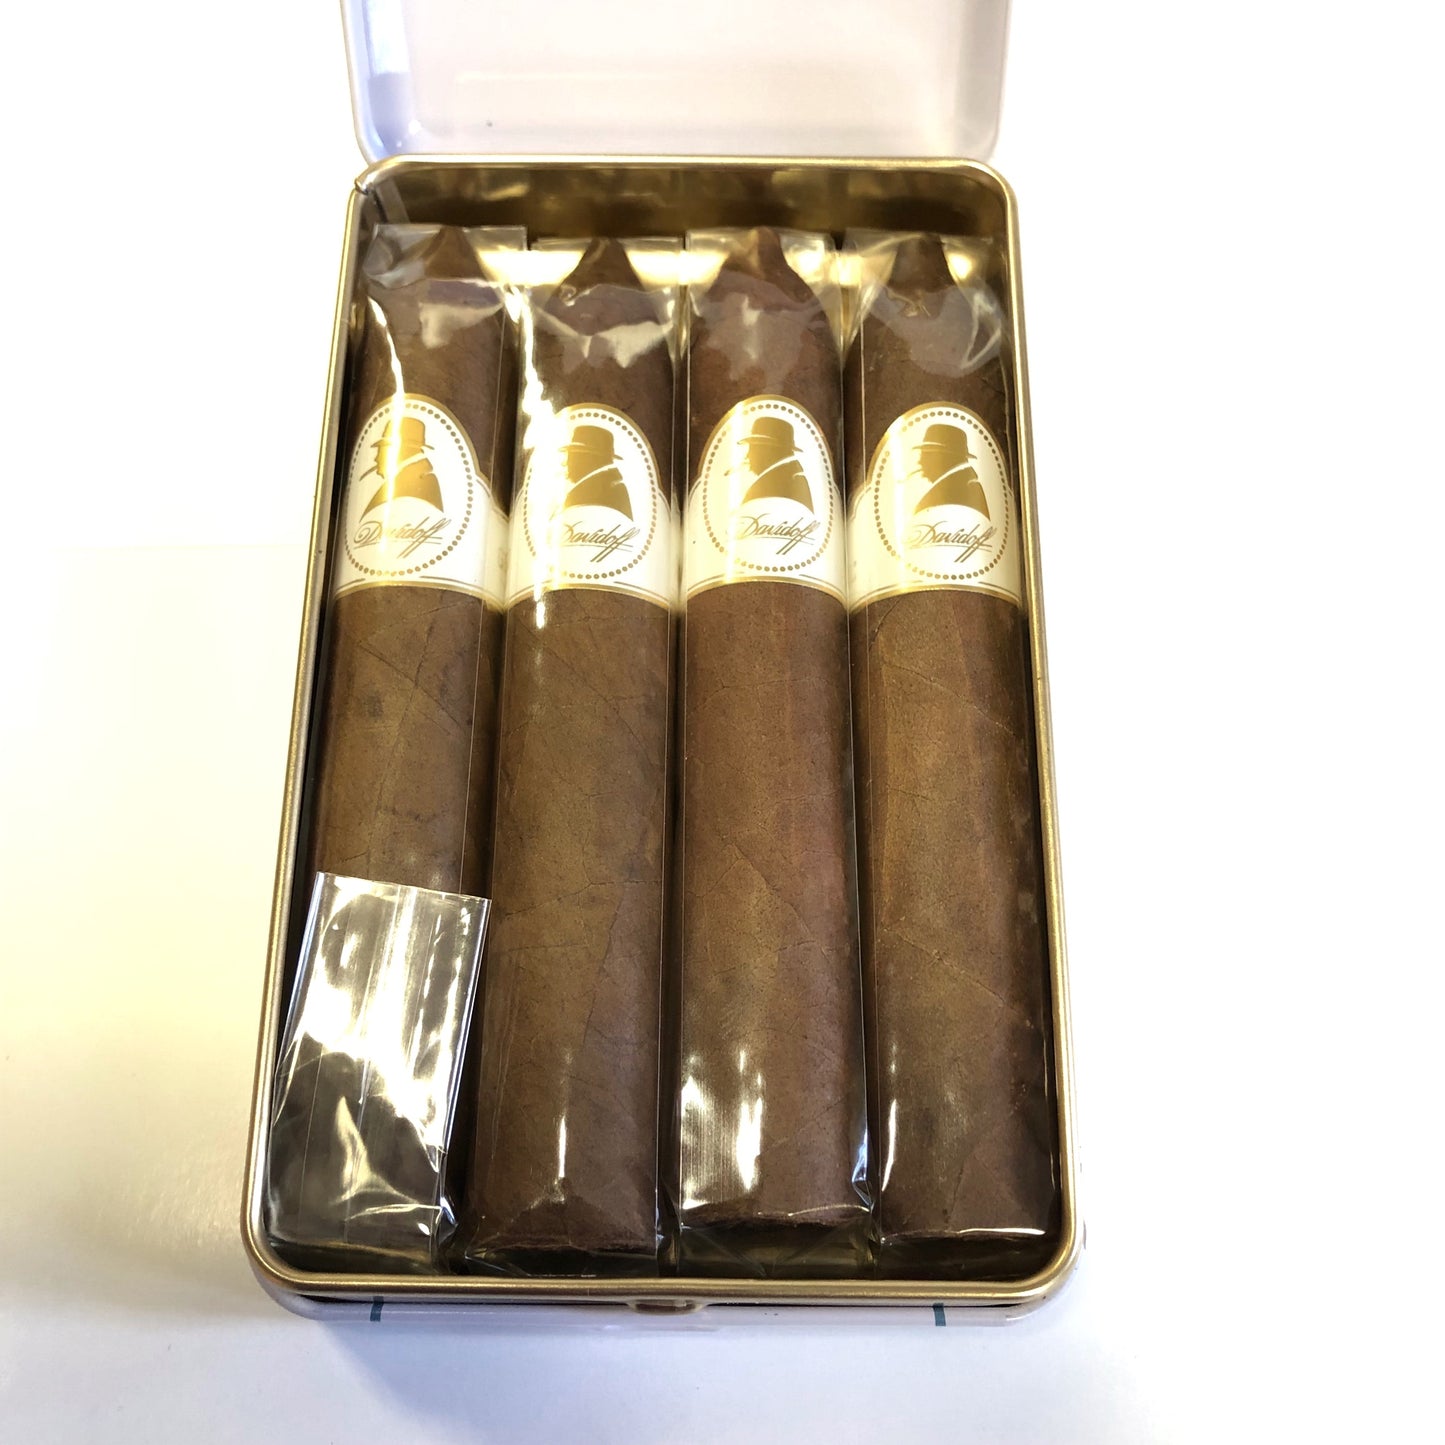 Davidoff Winston Churchill Belicoso 4 cigars